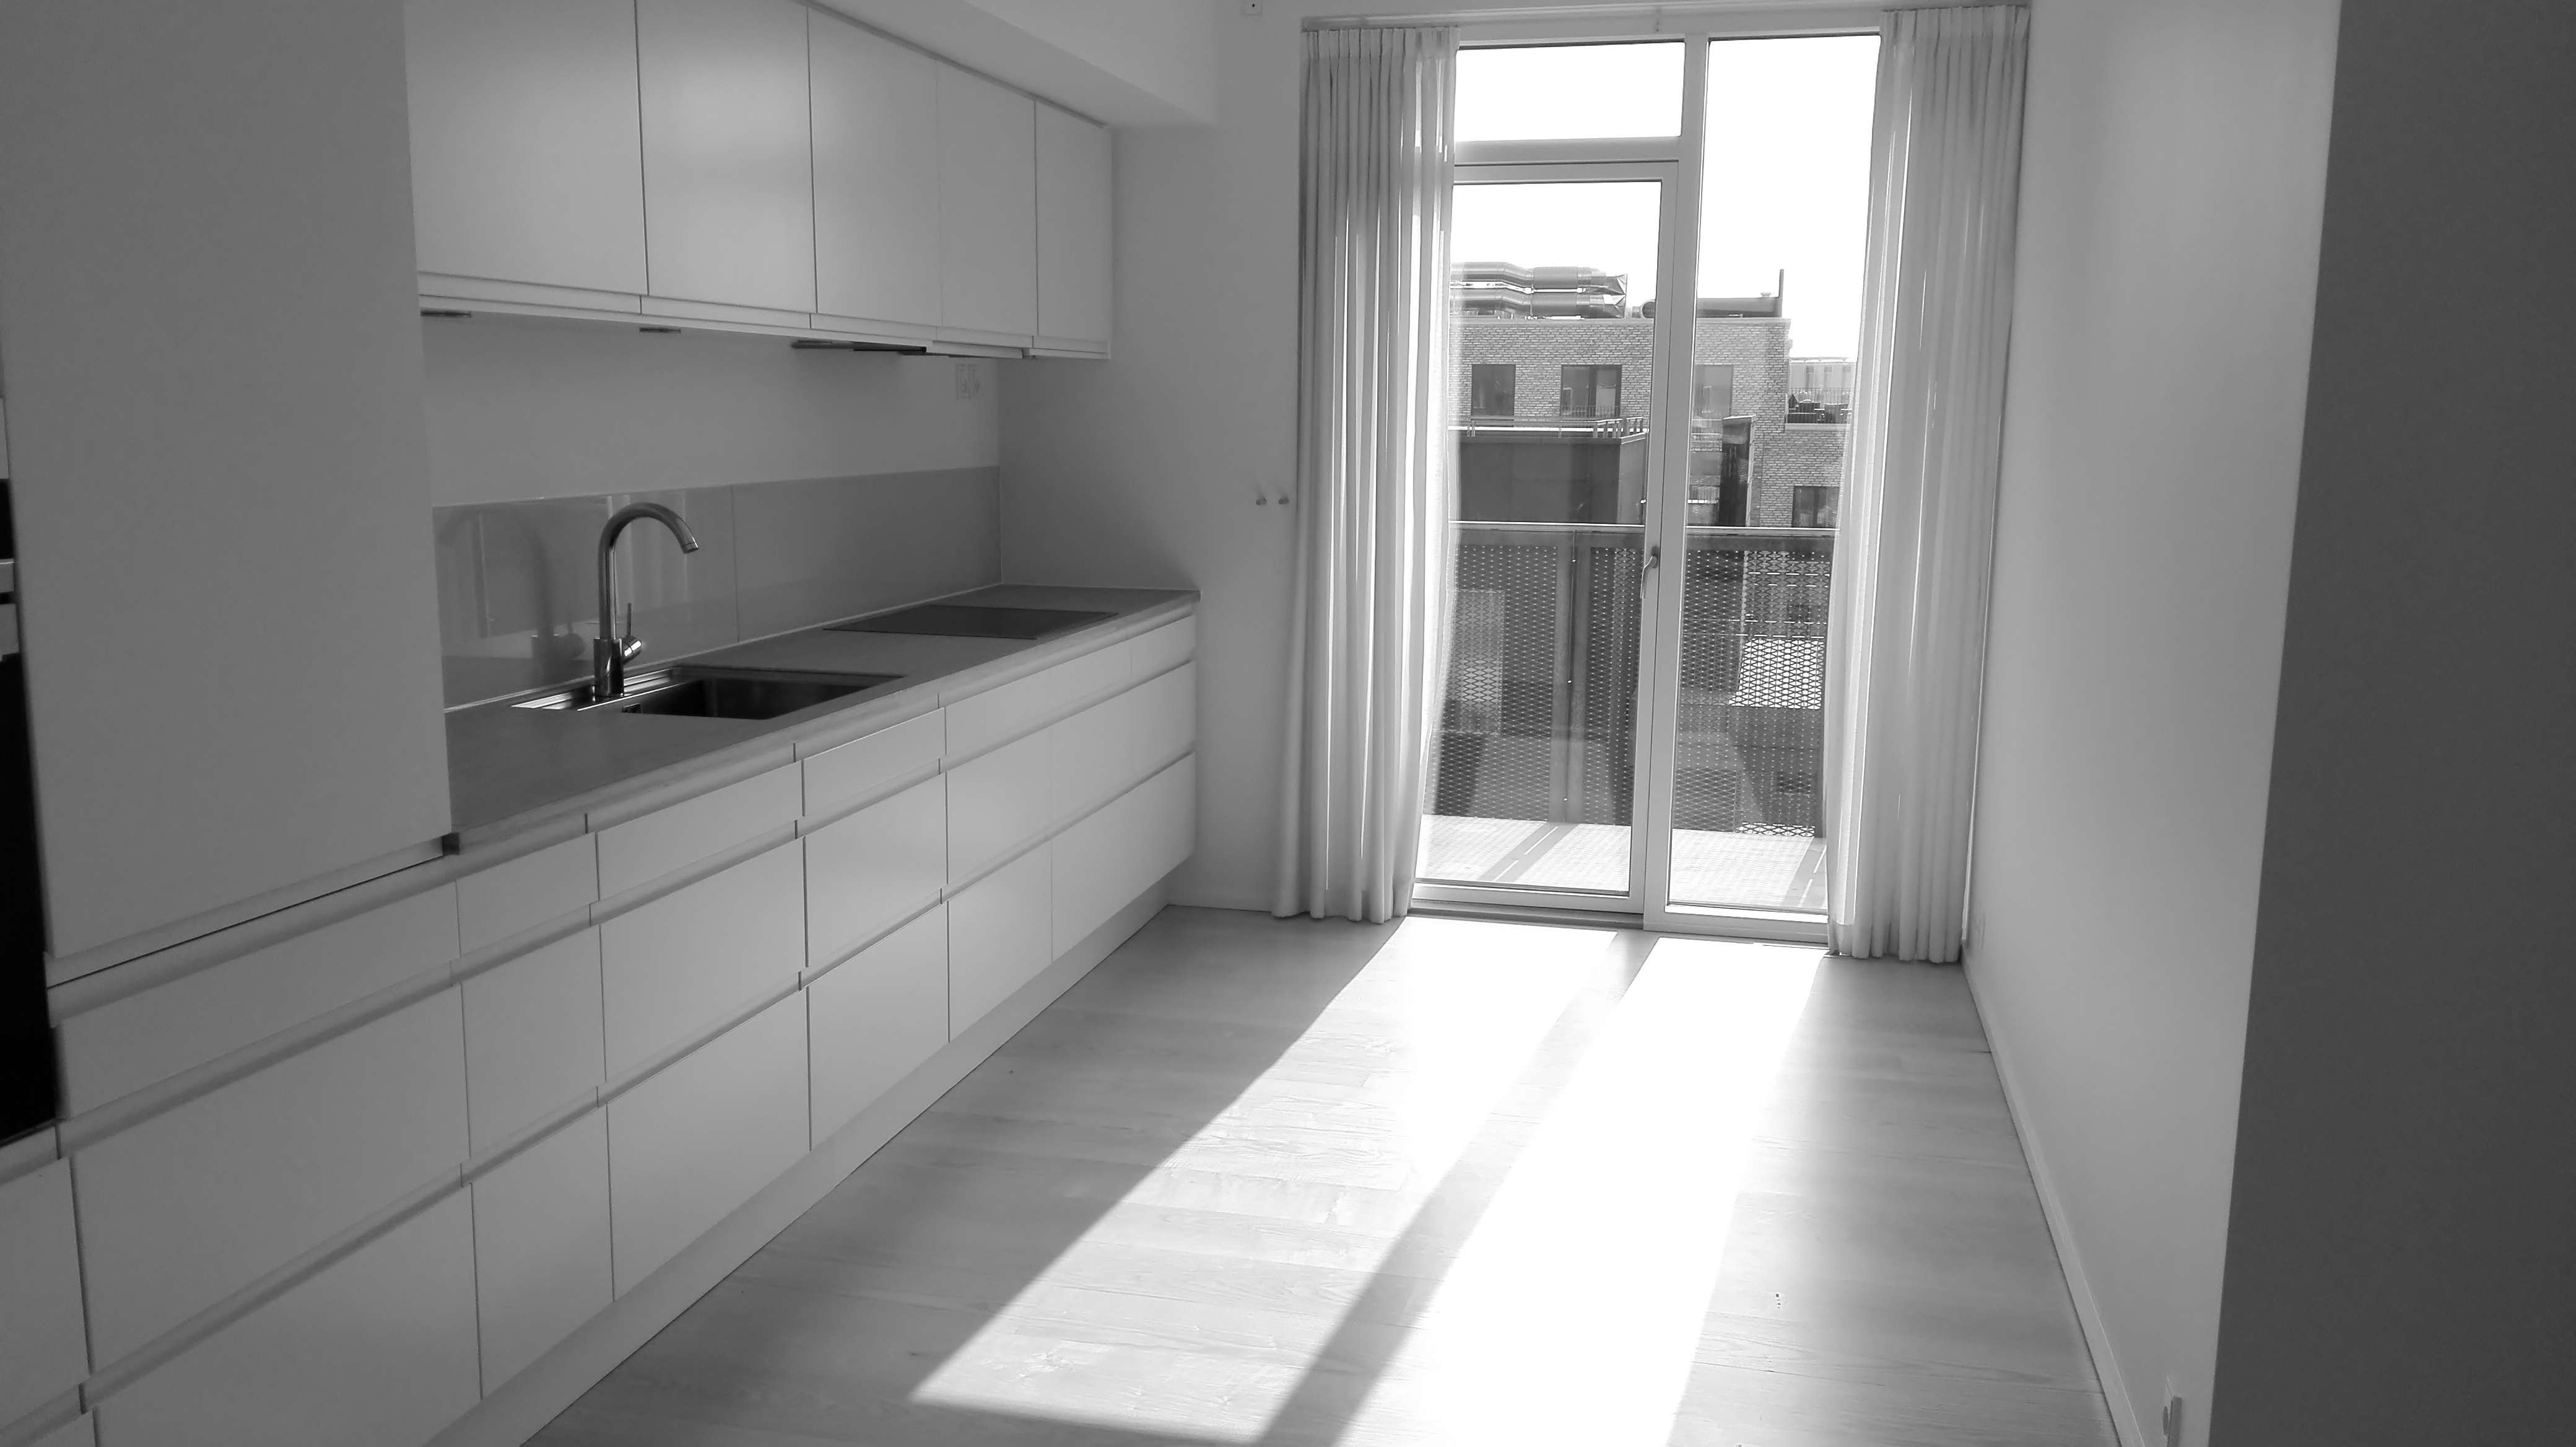 1052 – New apartment in Nordhavn